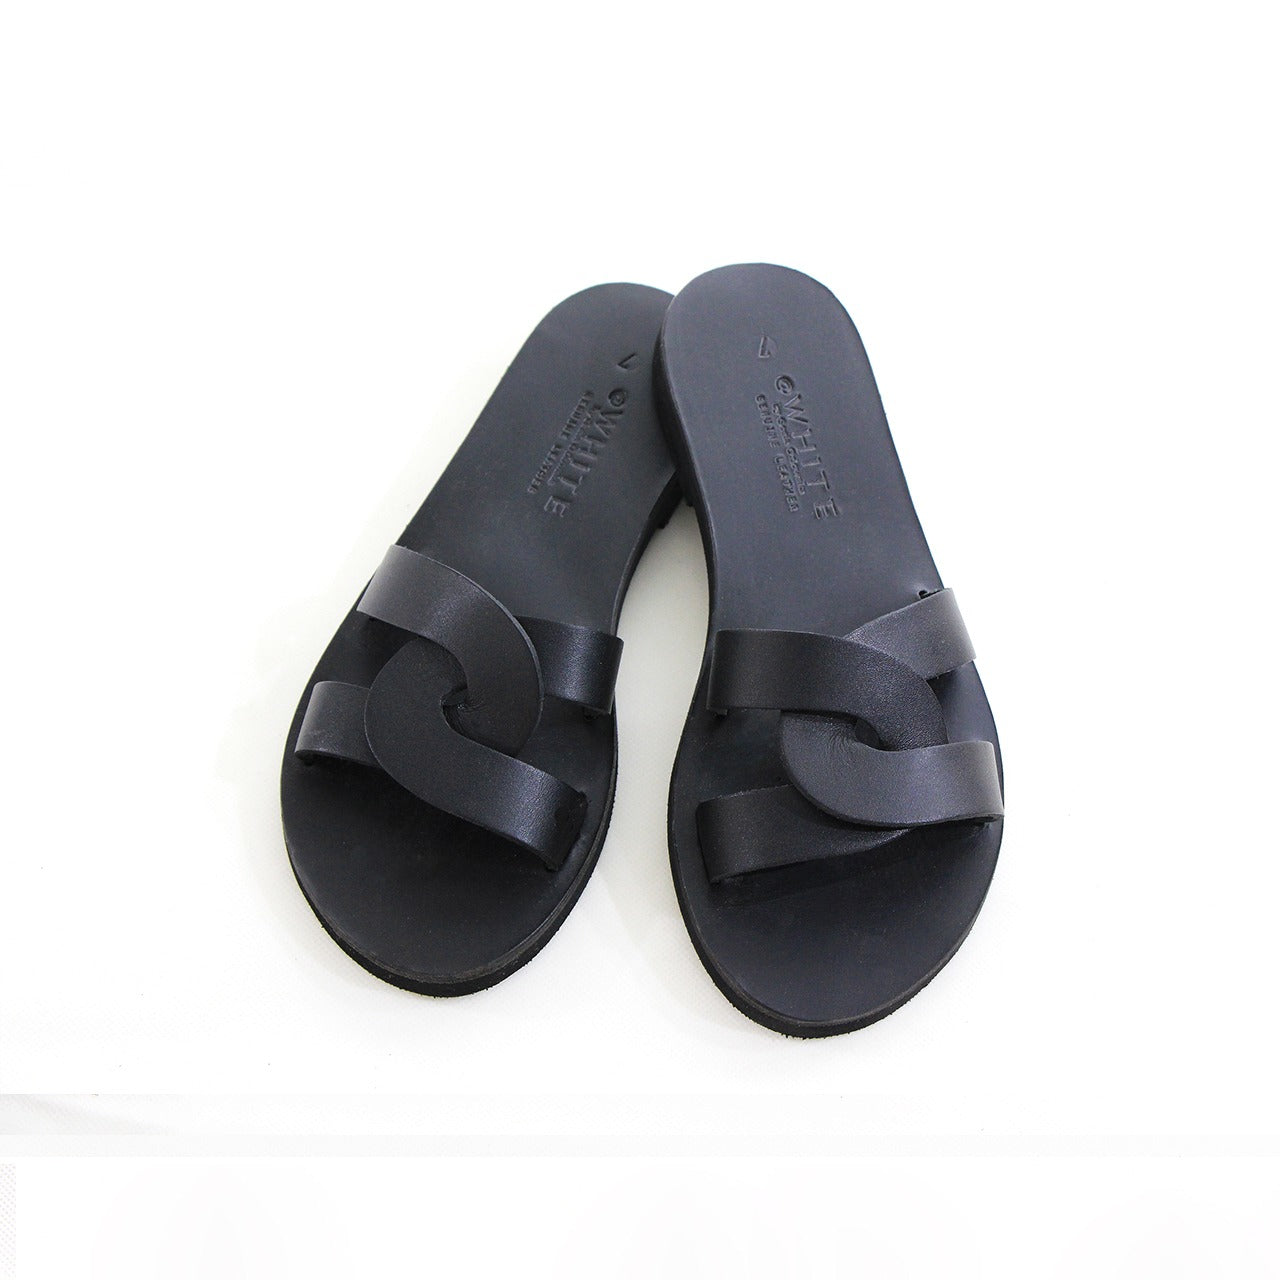 Stylish Black Leather Sandals by Gosia Orlowska